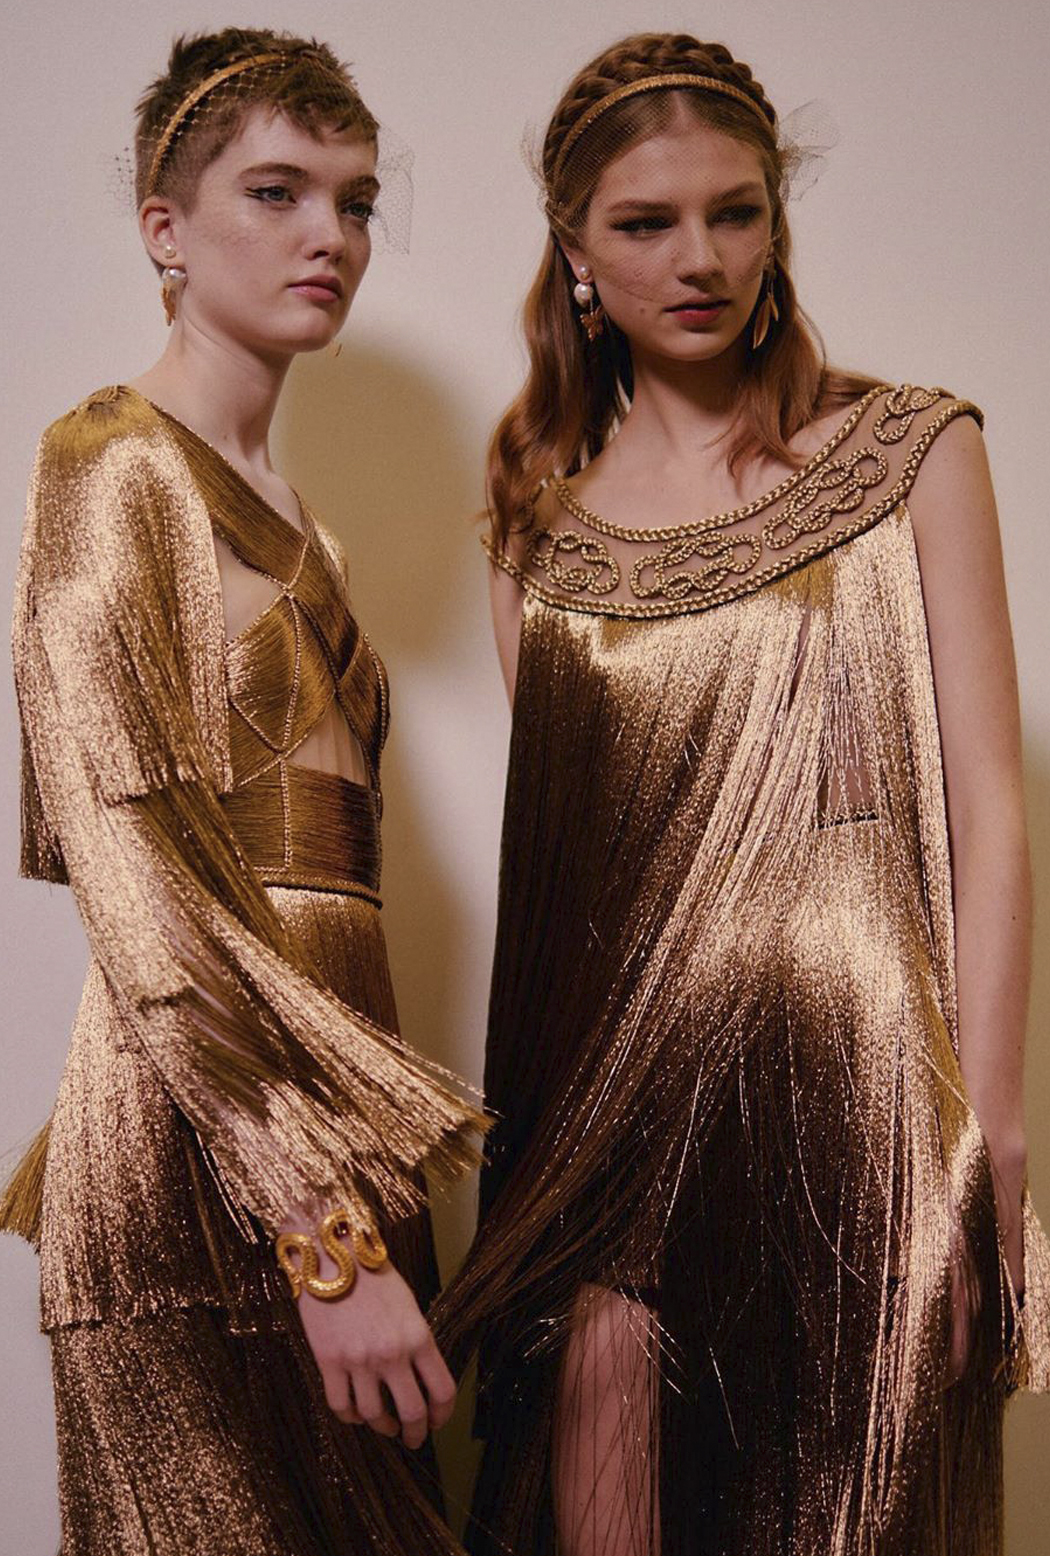 Греческие богини и жидкое золото на показе Dior Couture